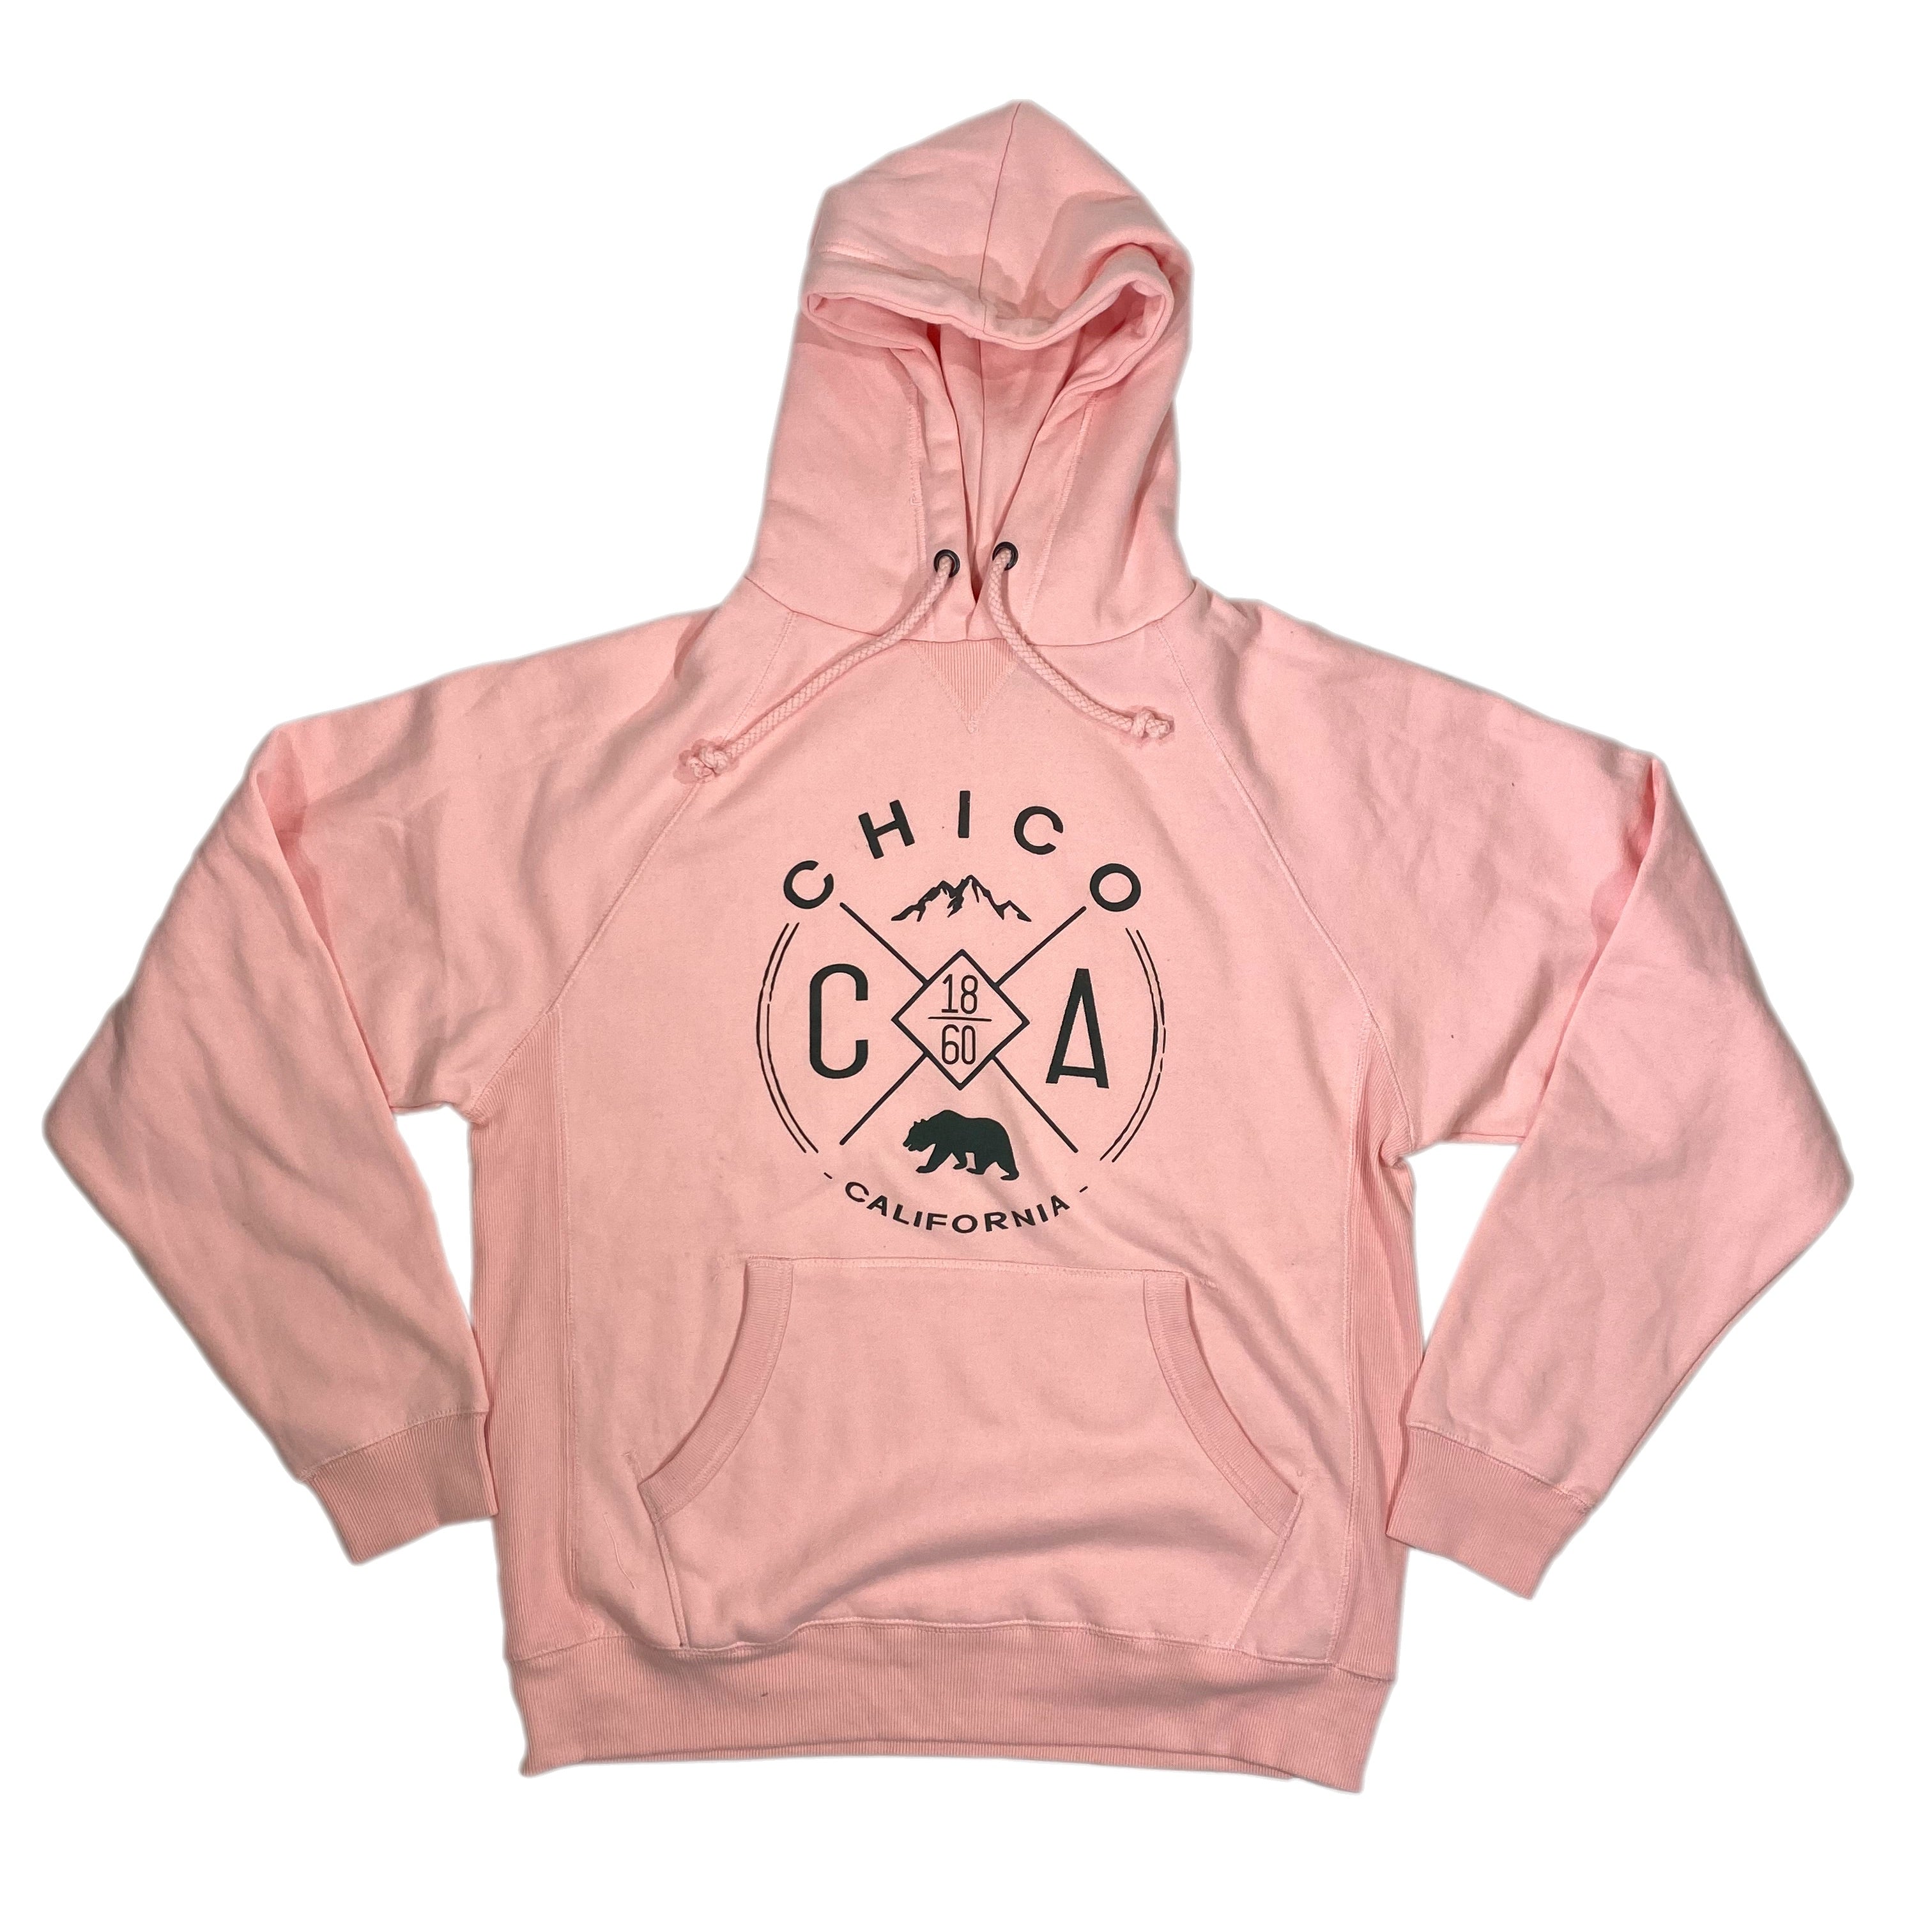 Handmade Mountain - Hooded Chico Sweatshirt SHELL PINK S  